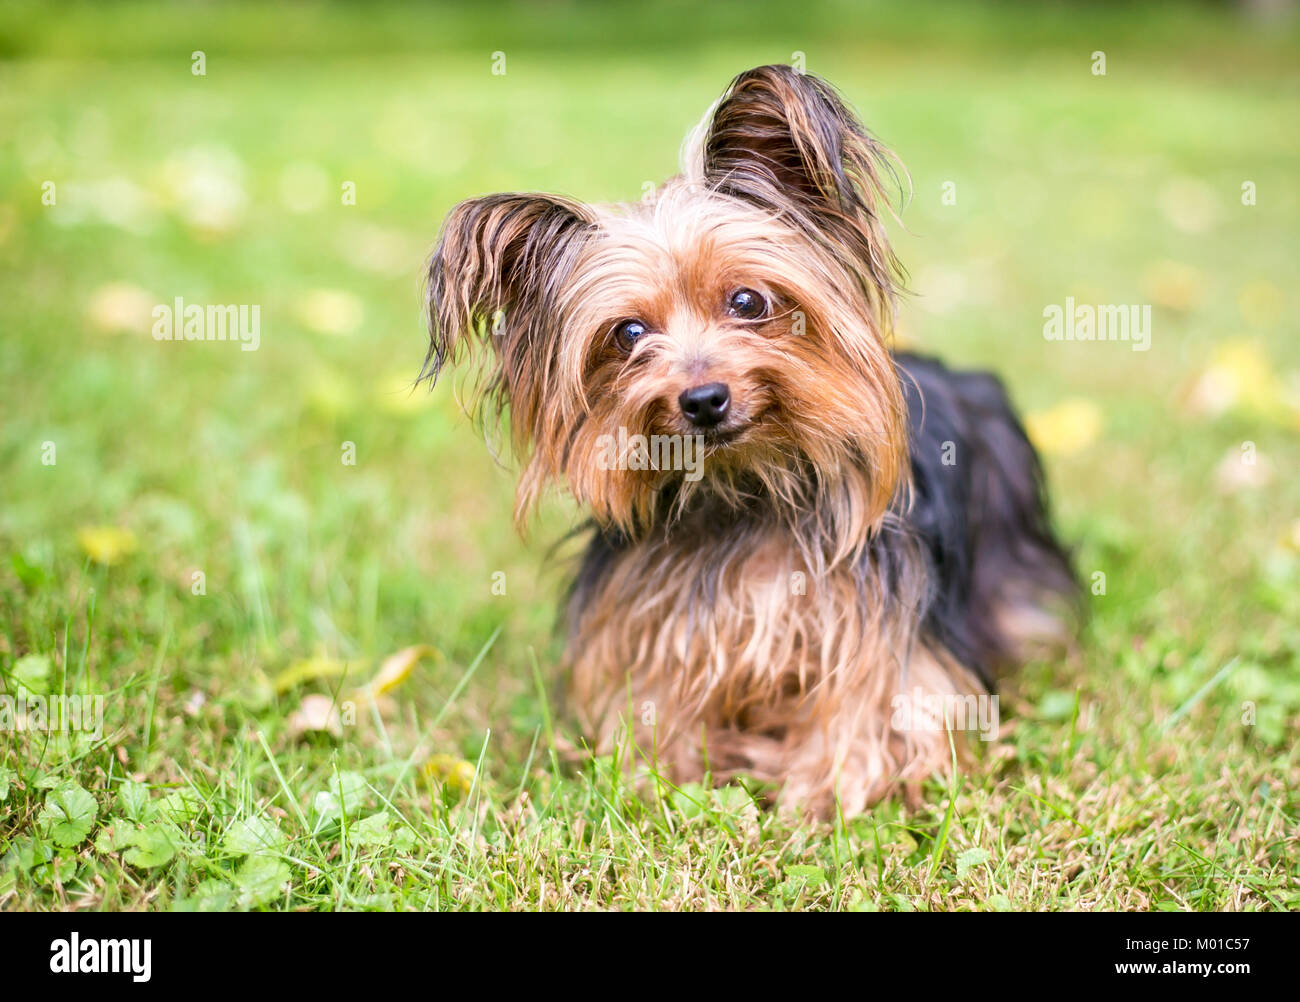 A Papillon/Silky Terrier mixed breed dog outdoors Stock Photo